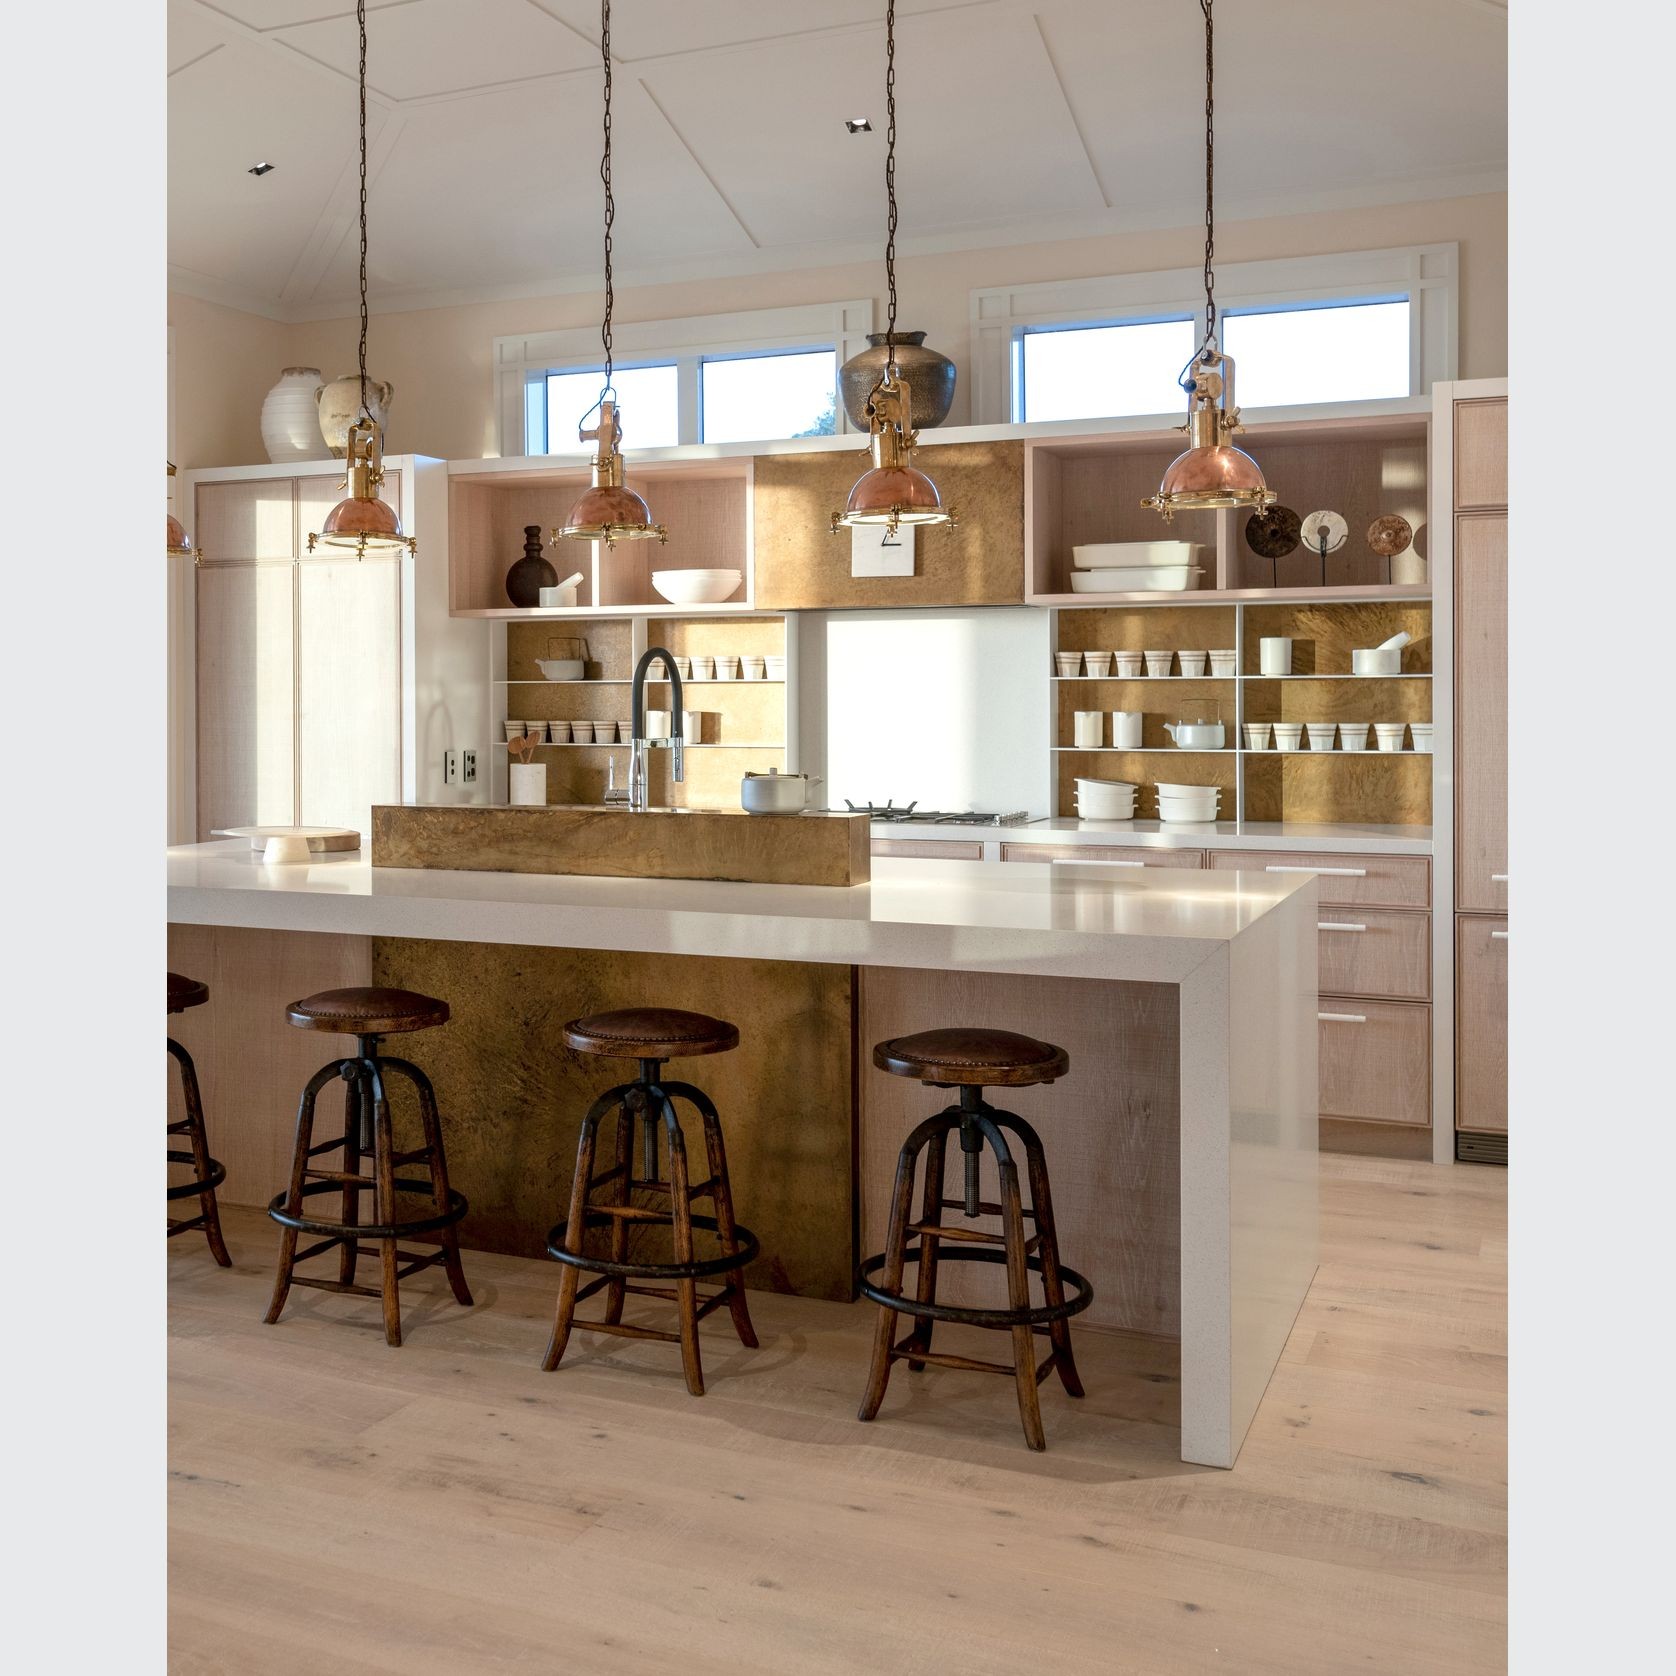 Villa Cashmere Rough Sawn Timber Flooring gallery detail image